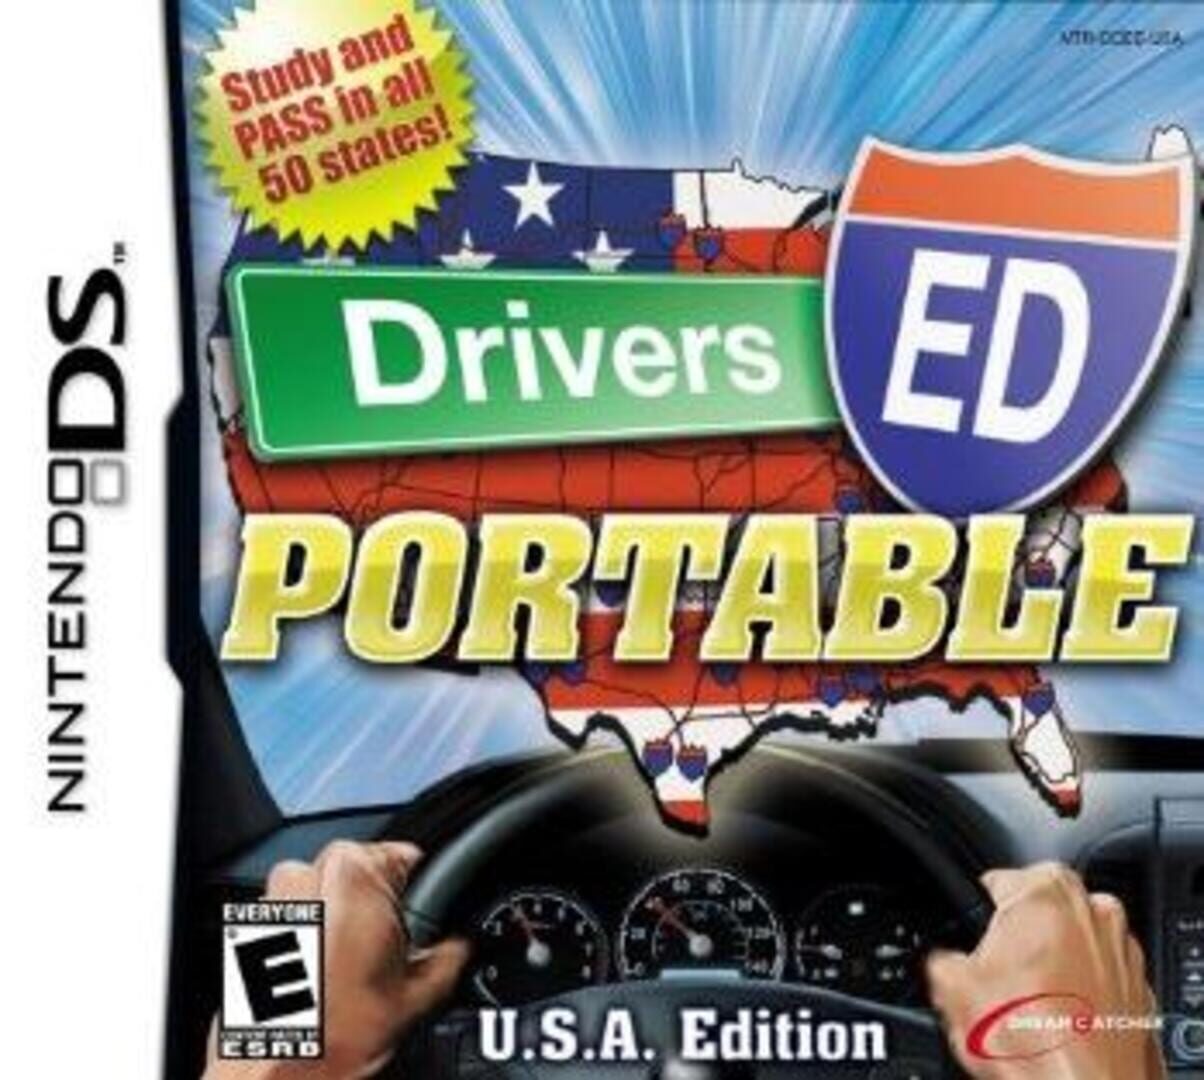 Drivers Ed Portable